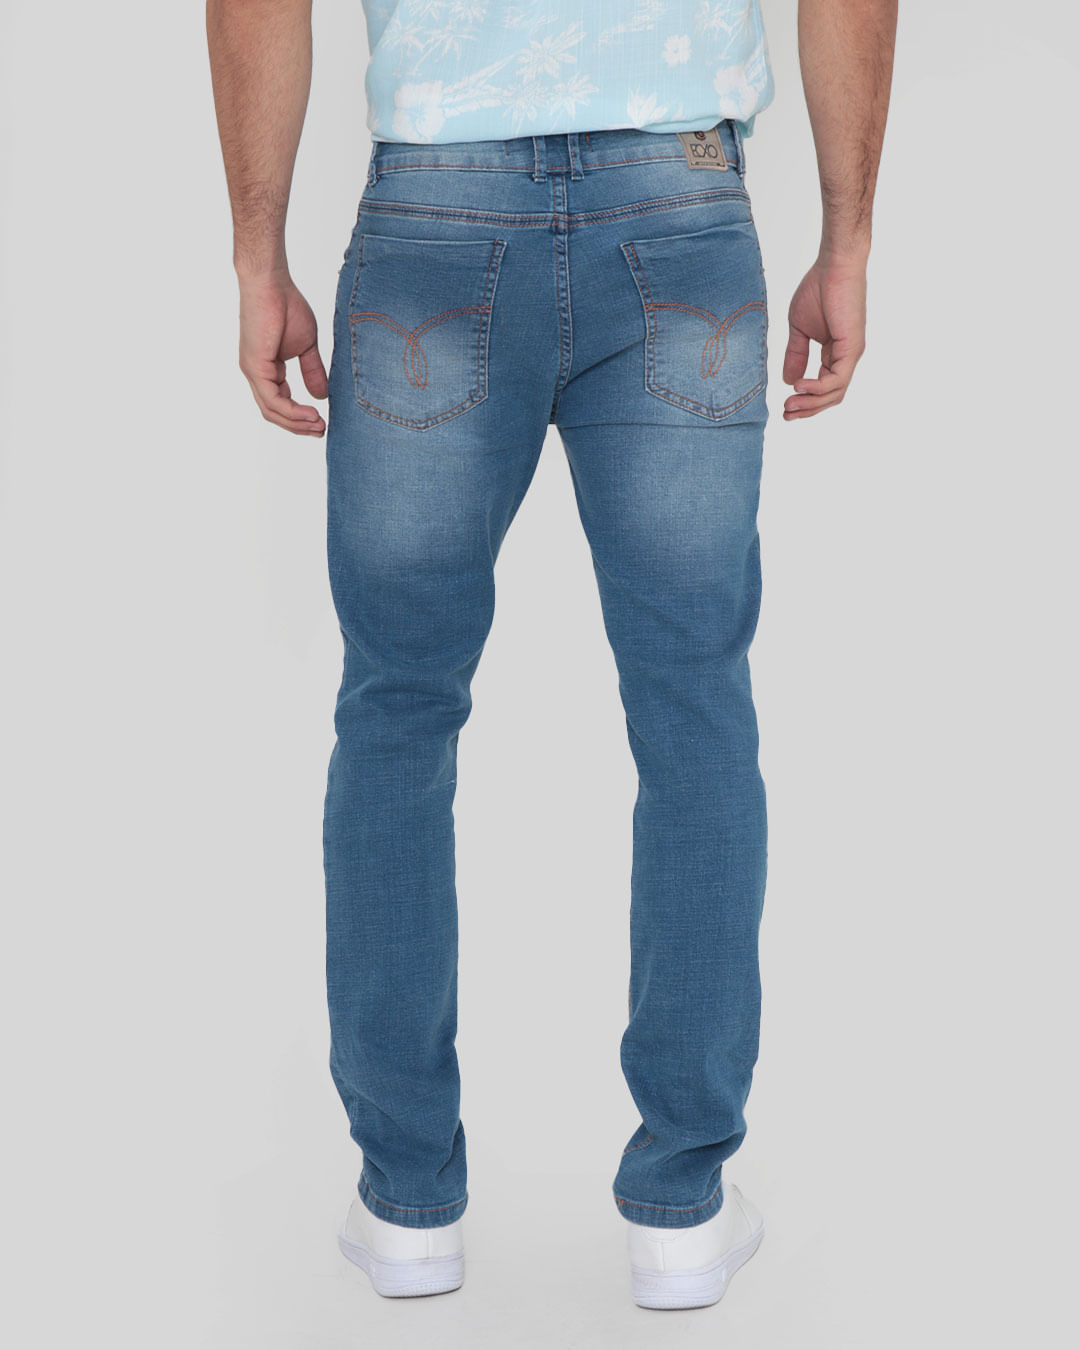 23121000994045-blue-jeans-medio-3